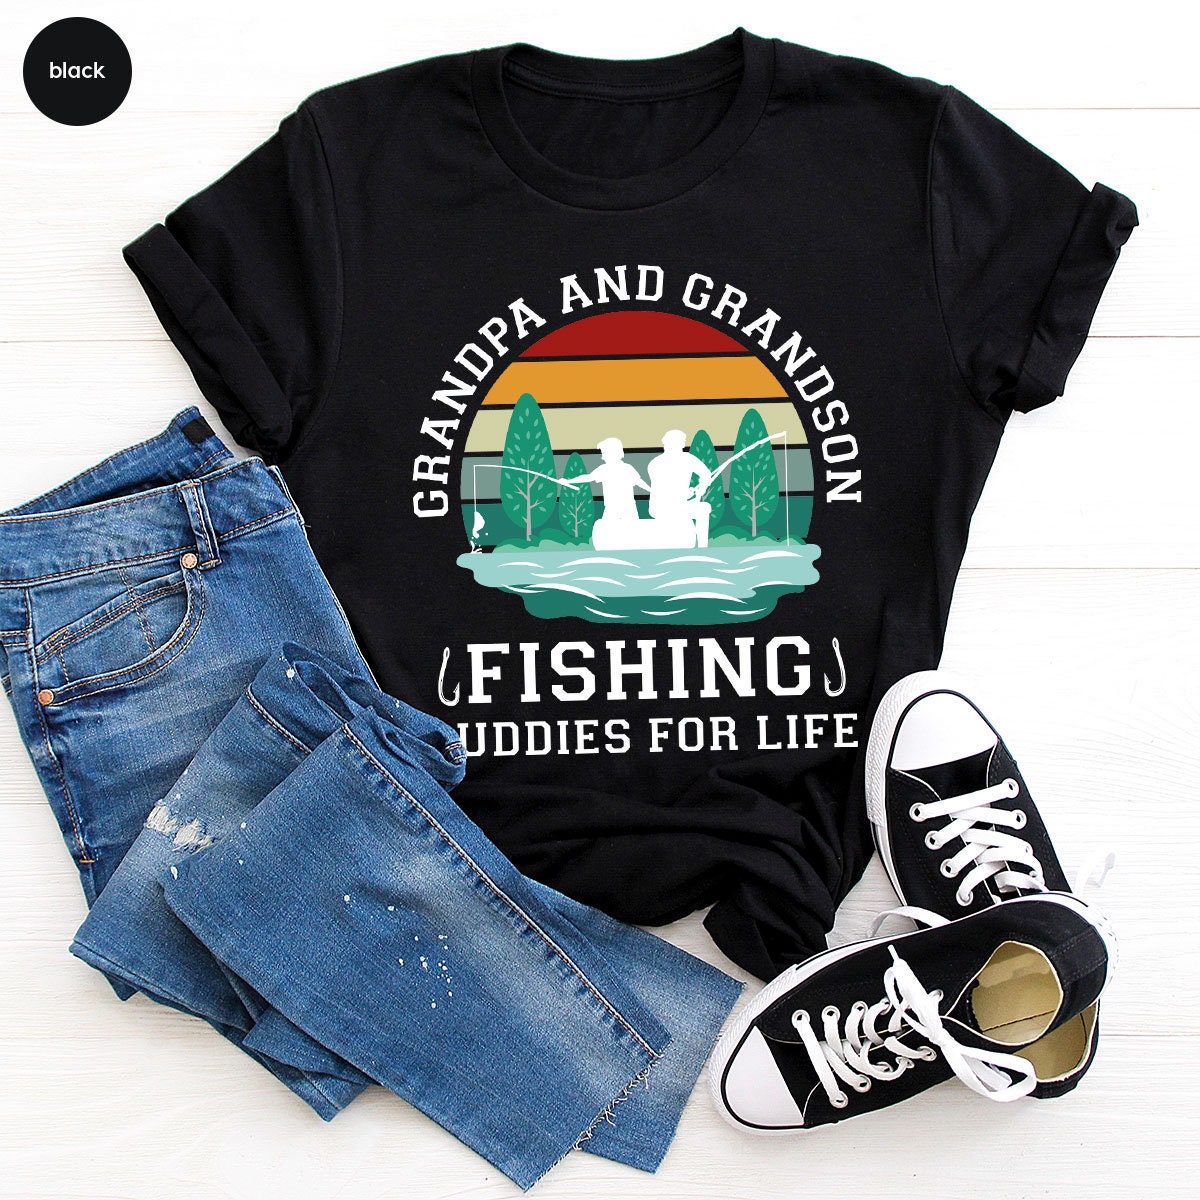 Grandpa and Grandson Fishing Buddies for Life Shirt, Funny Fishing Grandpa Grandson Crewneck Shirts, Fishing Gifts for Grandpa from Grandson